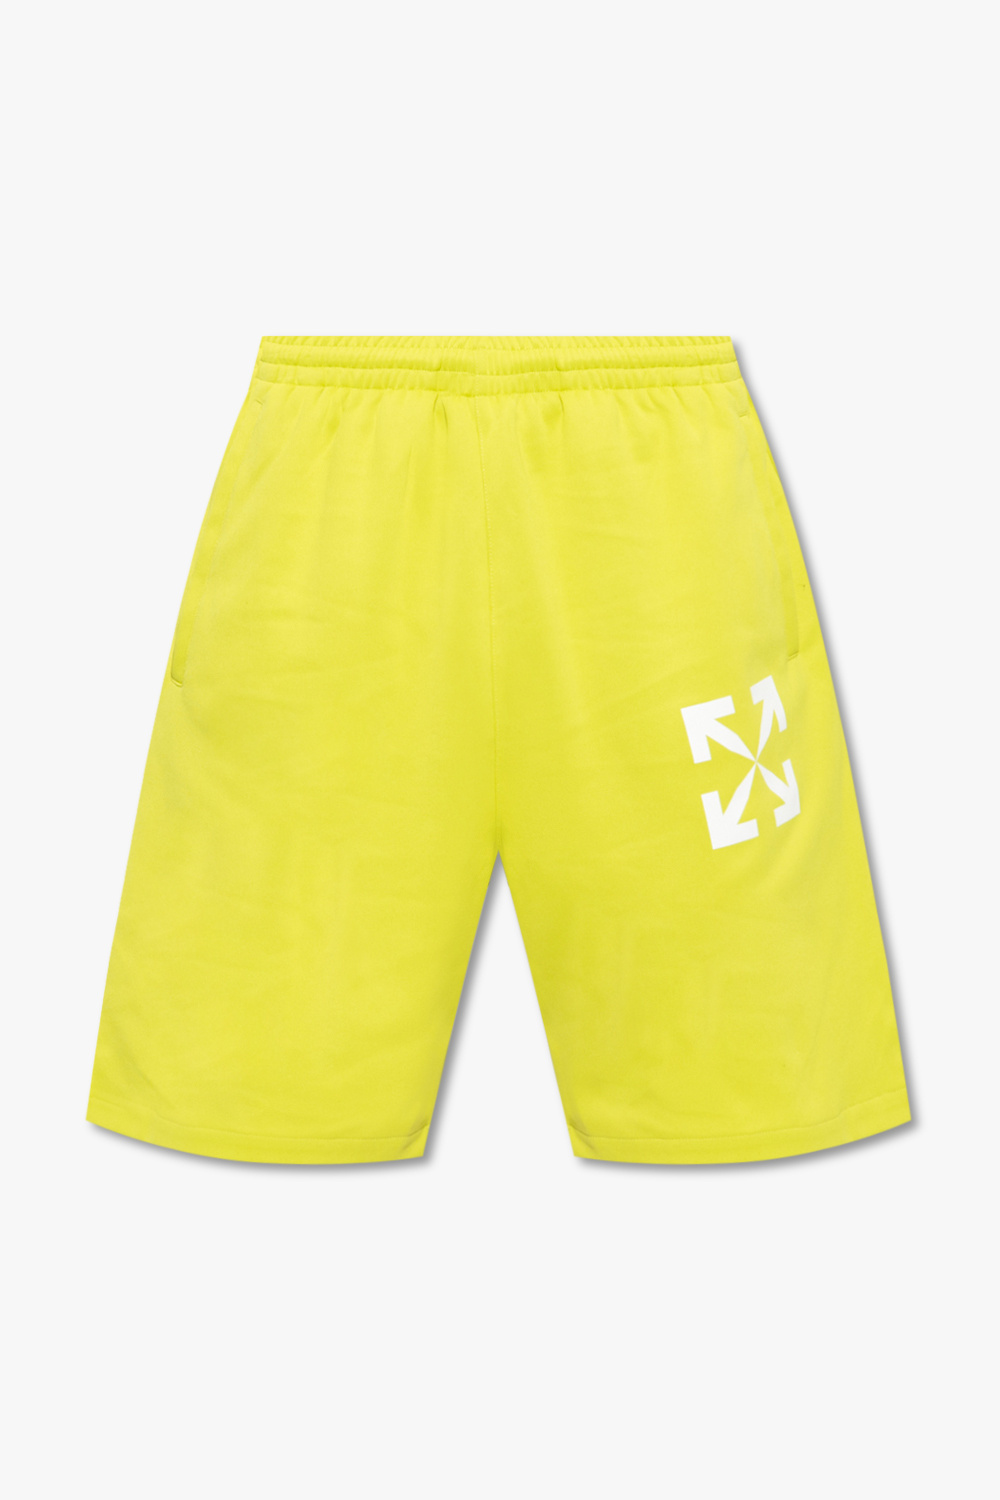 Off-White Shorts with logo | Men's Clothing | Vitkac